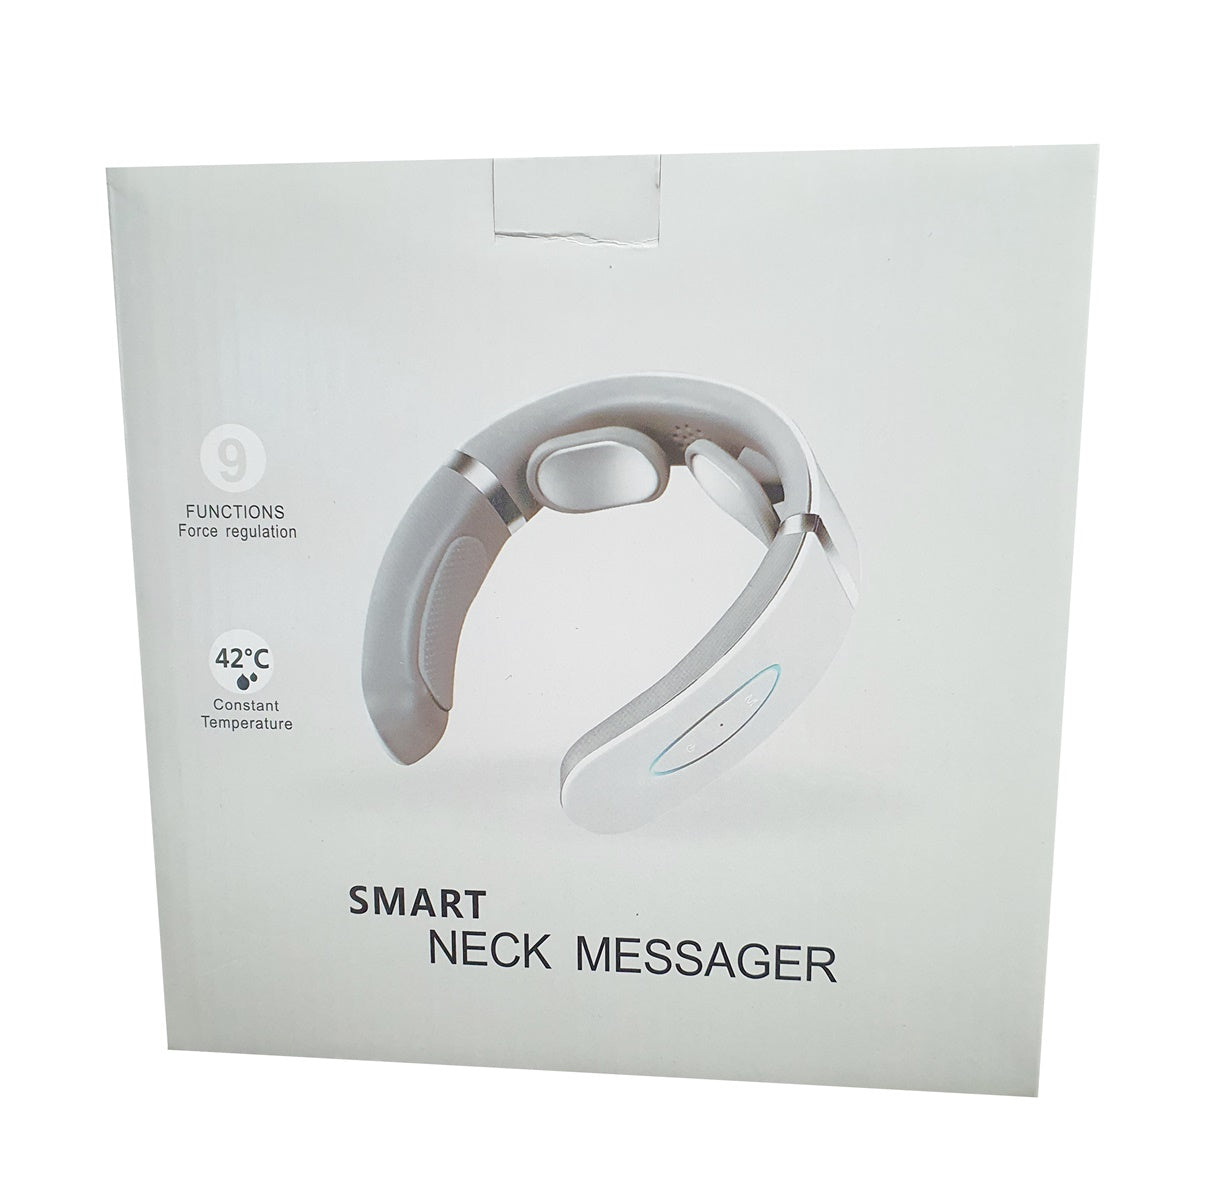 The Smart Portable Neck Massager